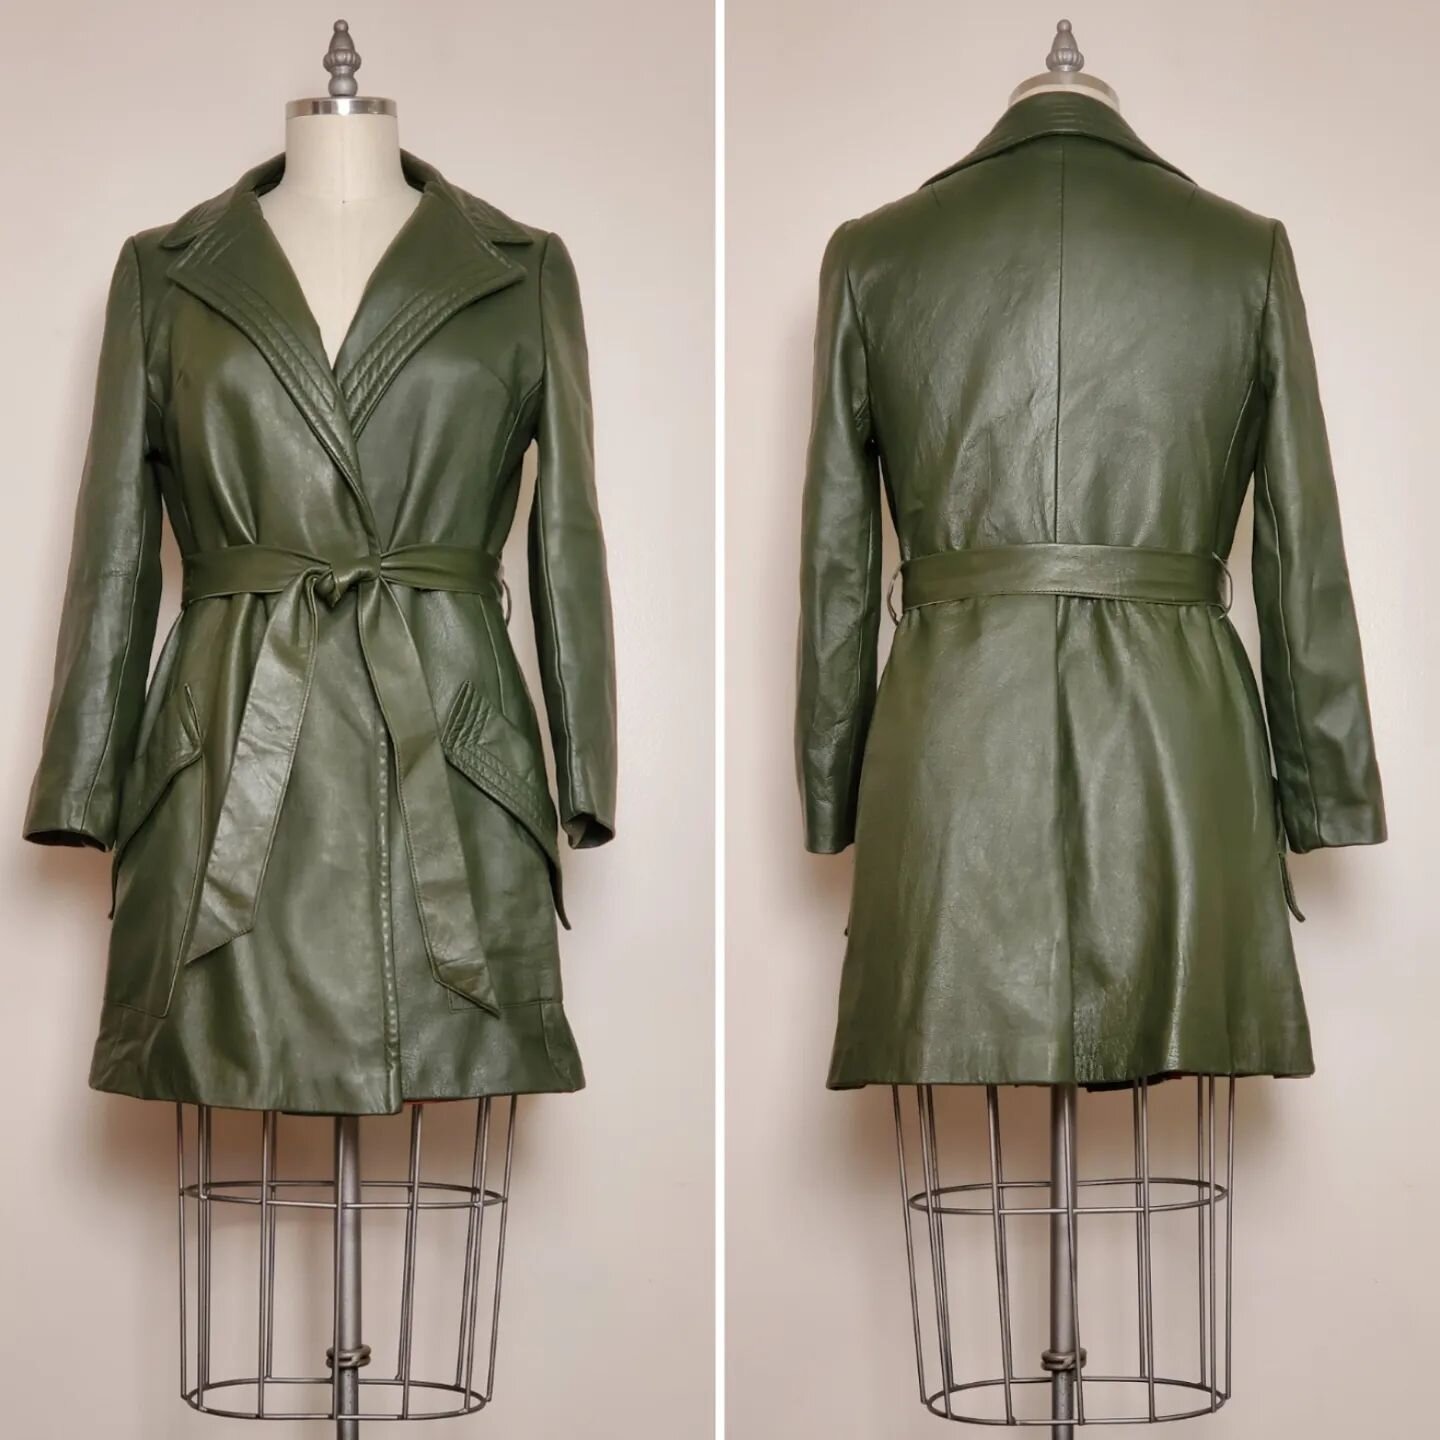 ♻️ Available ♻️
1970's Forest Green Leather Coat || Size: Large 
.
.
.
.
#vintageshop #vintageclothing #1970sfashion #1970svintage #AtahBoutique #atahvintage #atah